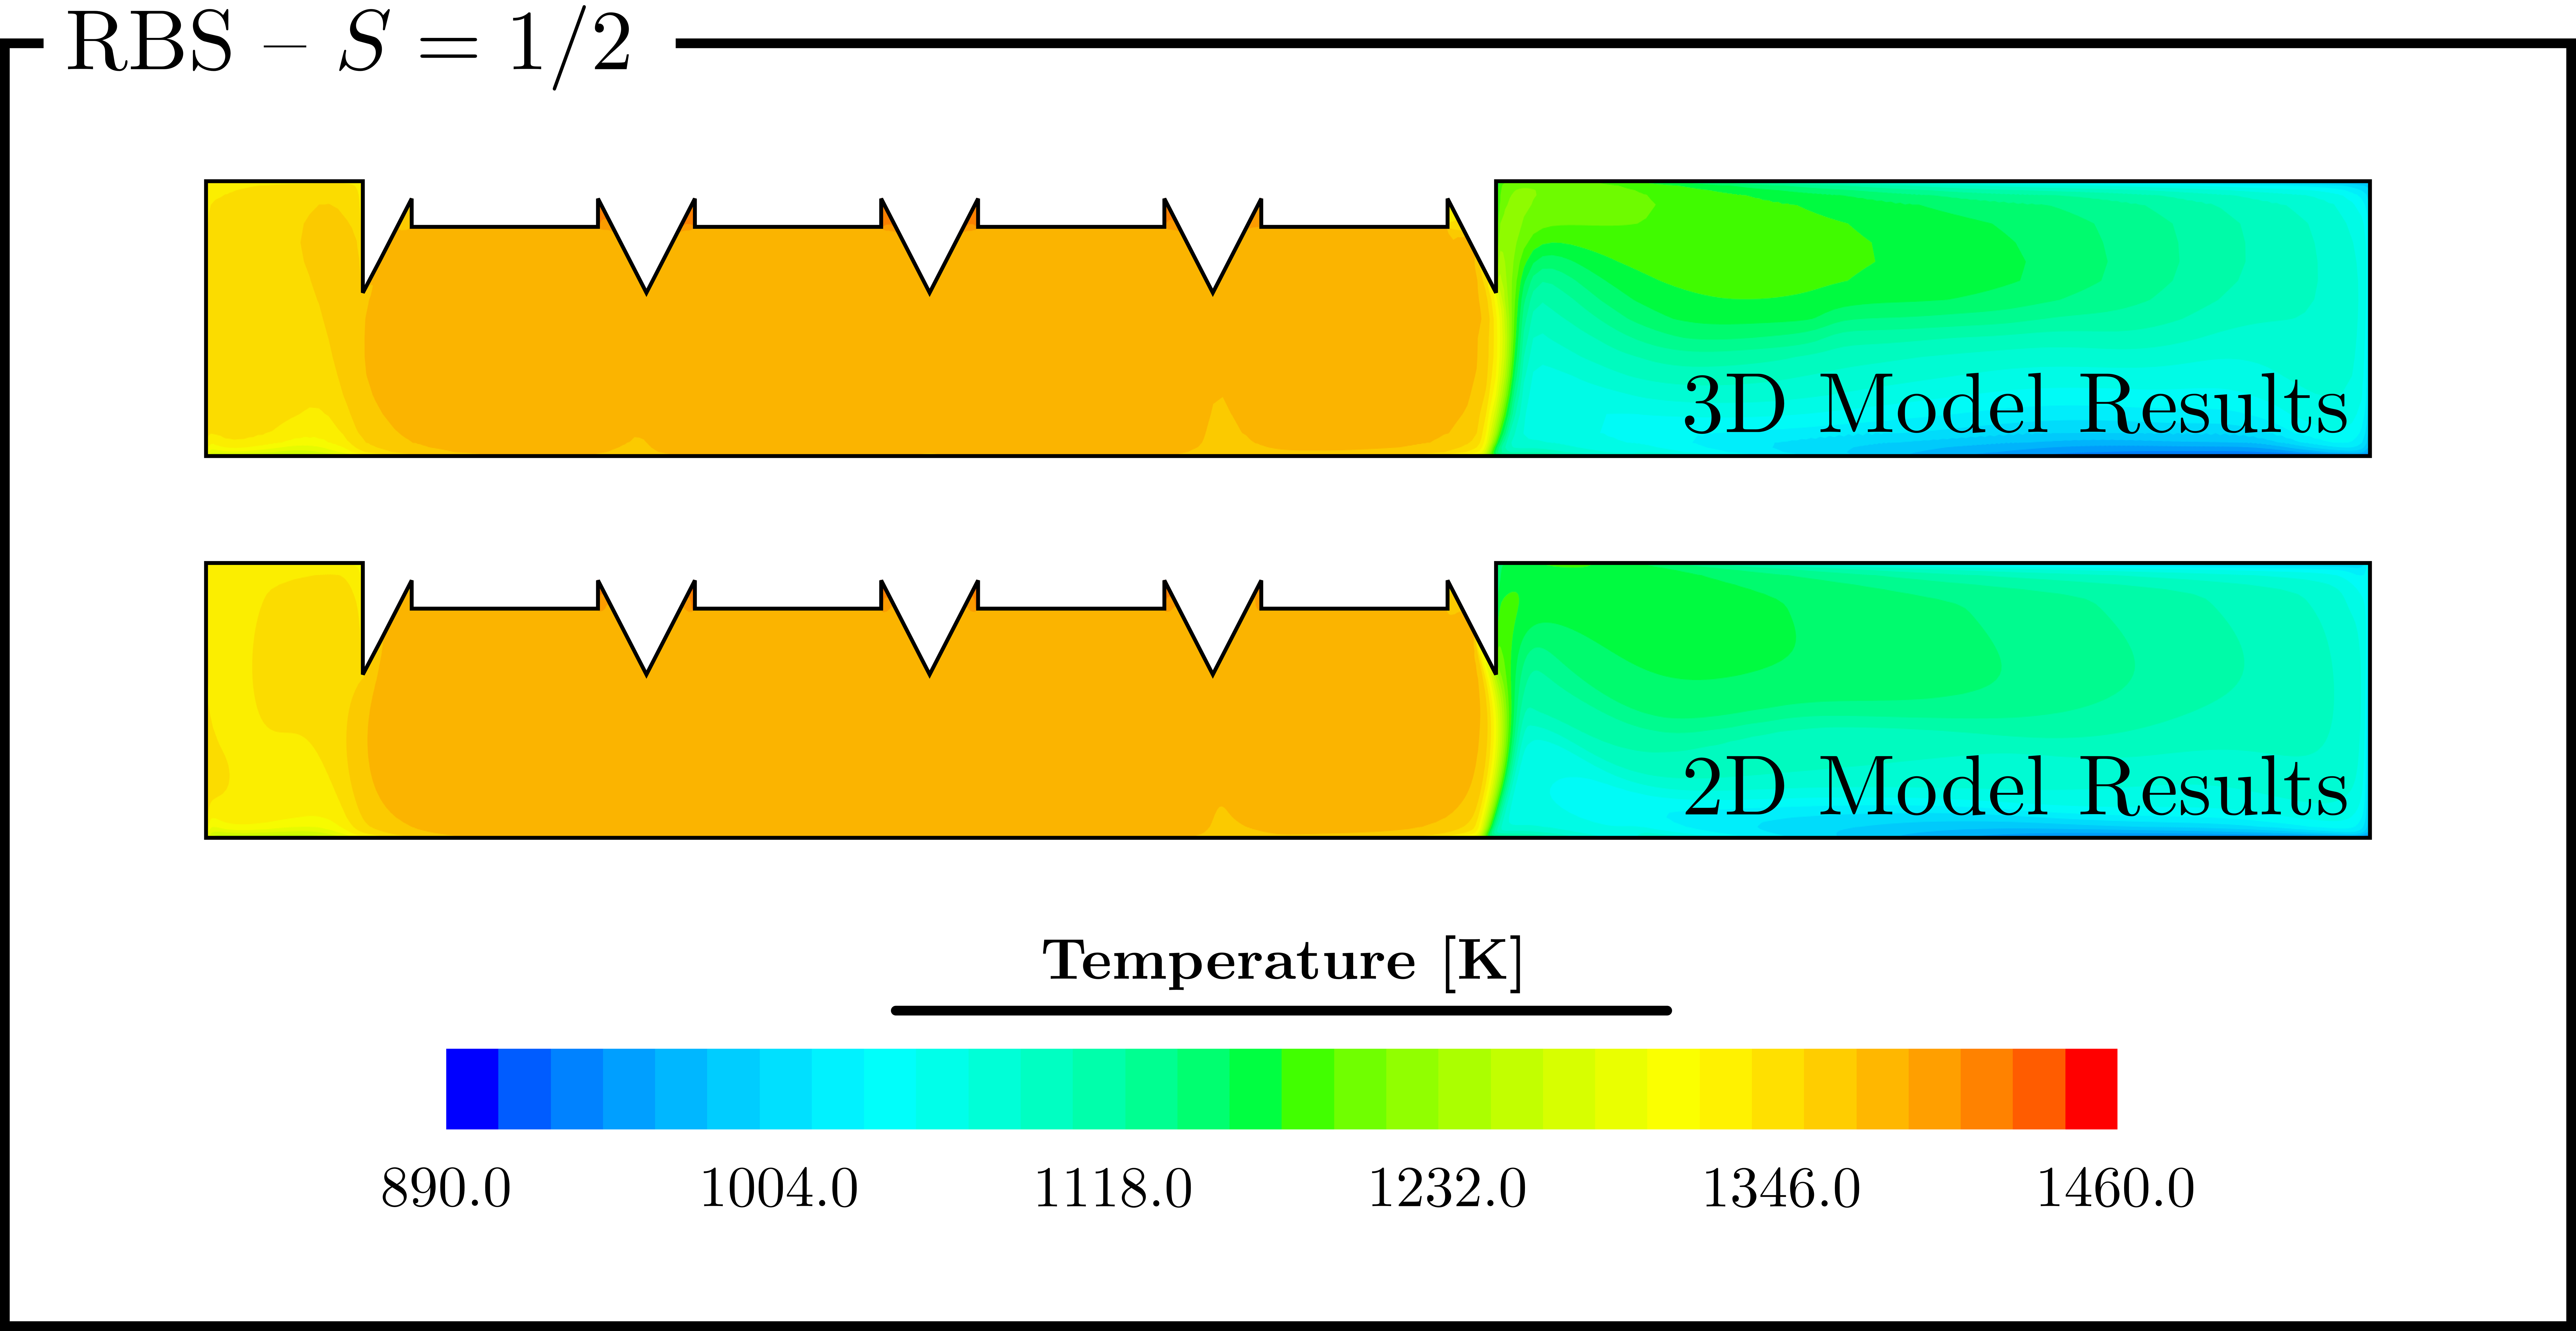 3Dvs2D-RBS_TemperaturesComparison